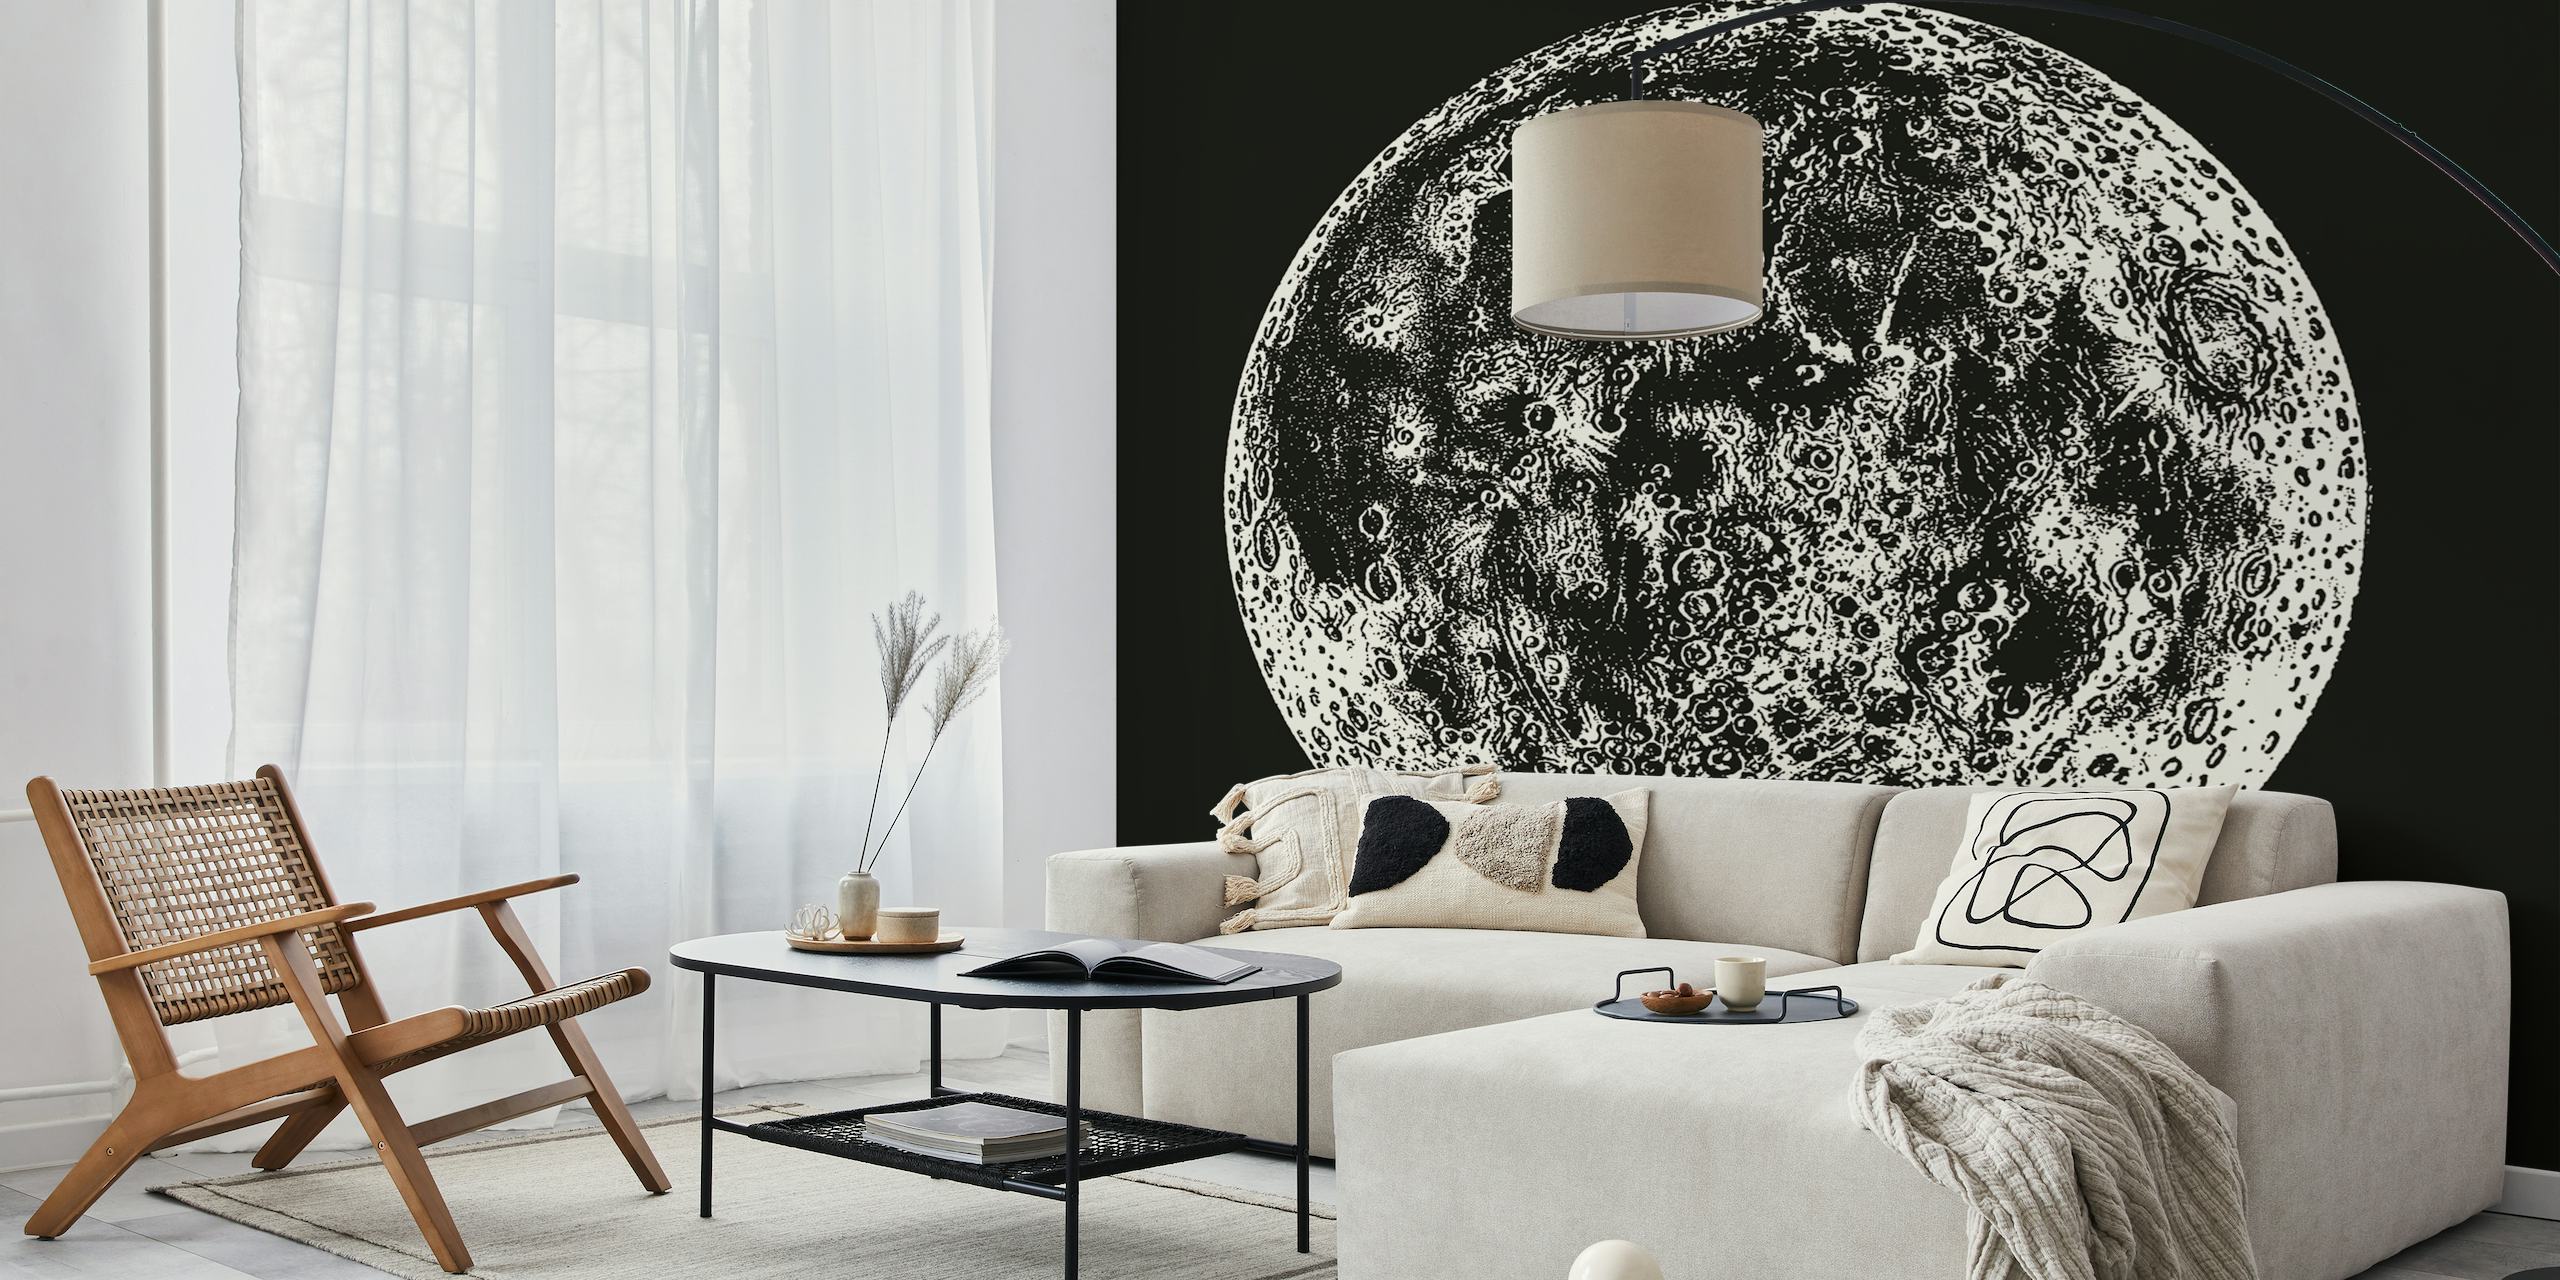 Full Moon - Vintage Astër papel pintado